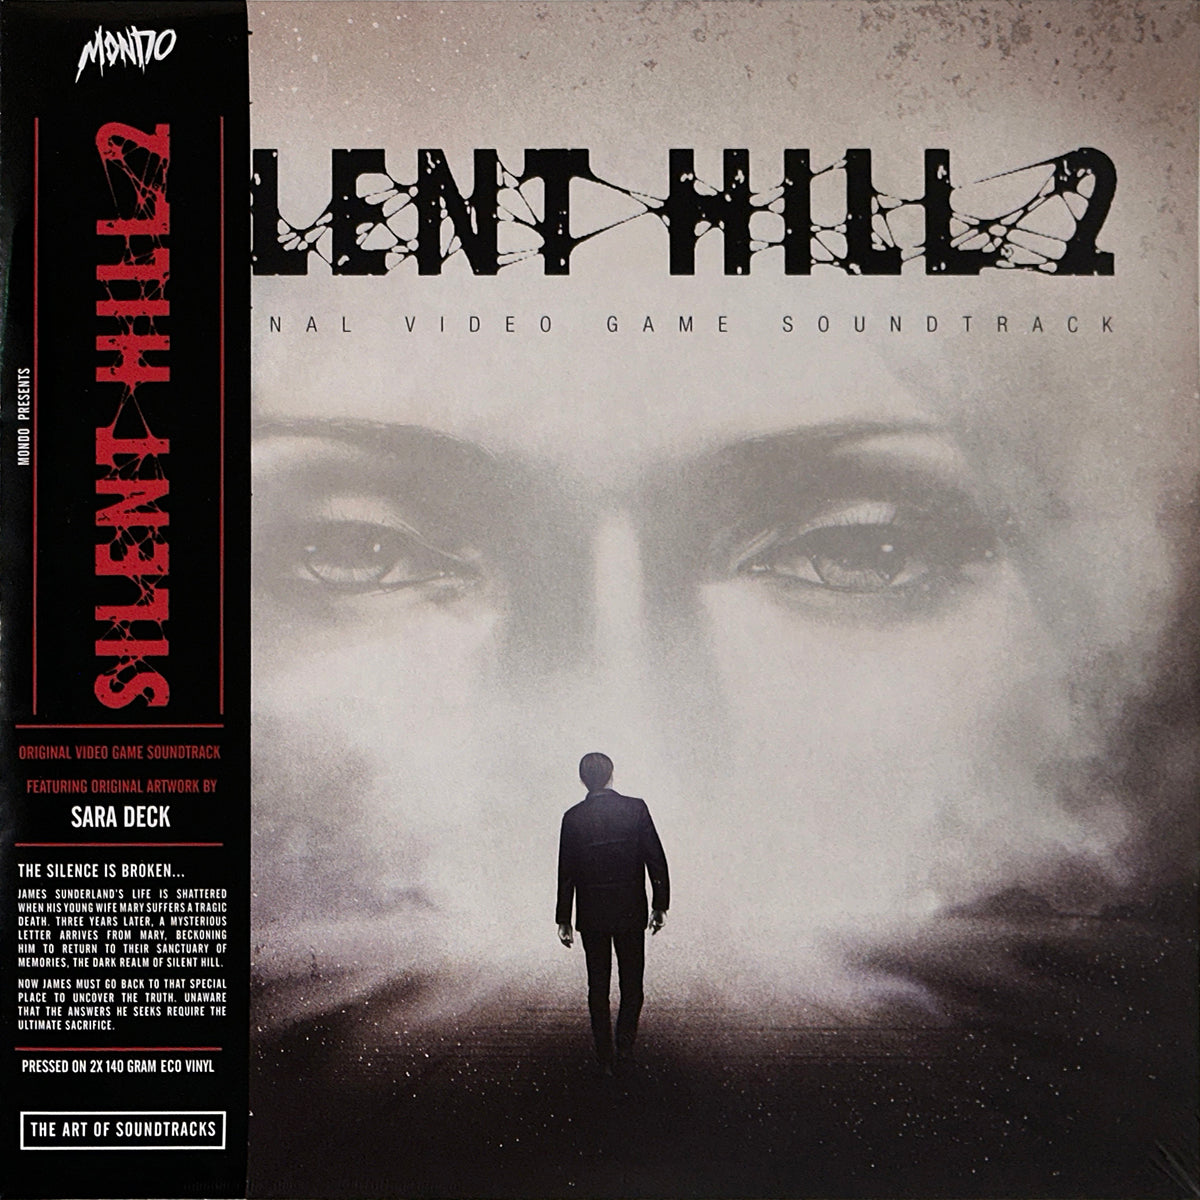 Silent Hill 2 (Original Video Game Soundtrack)